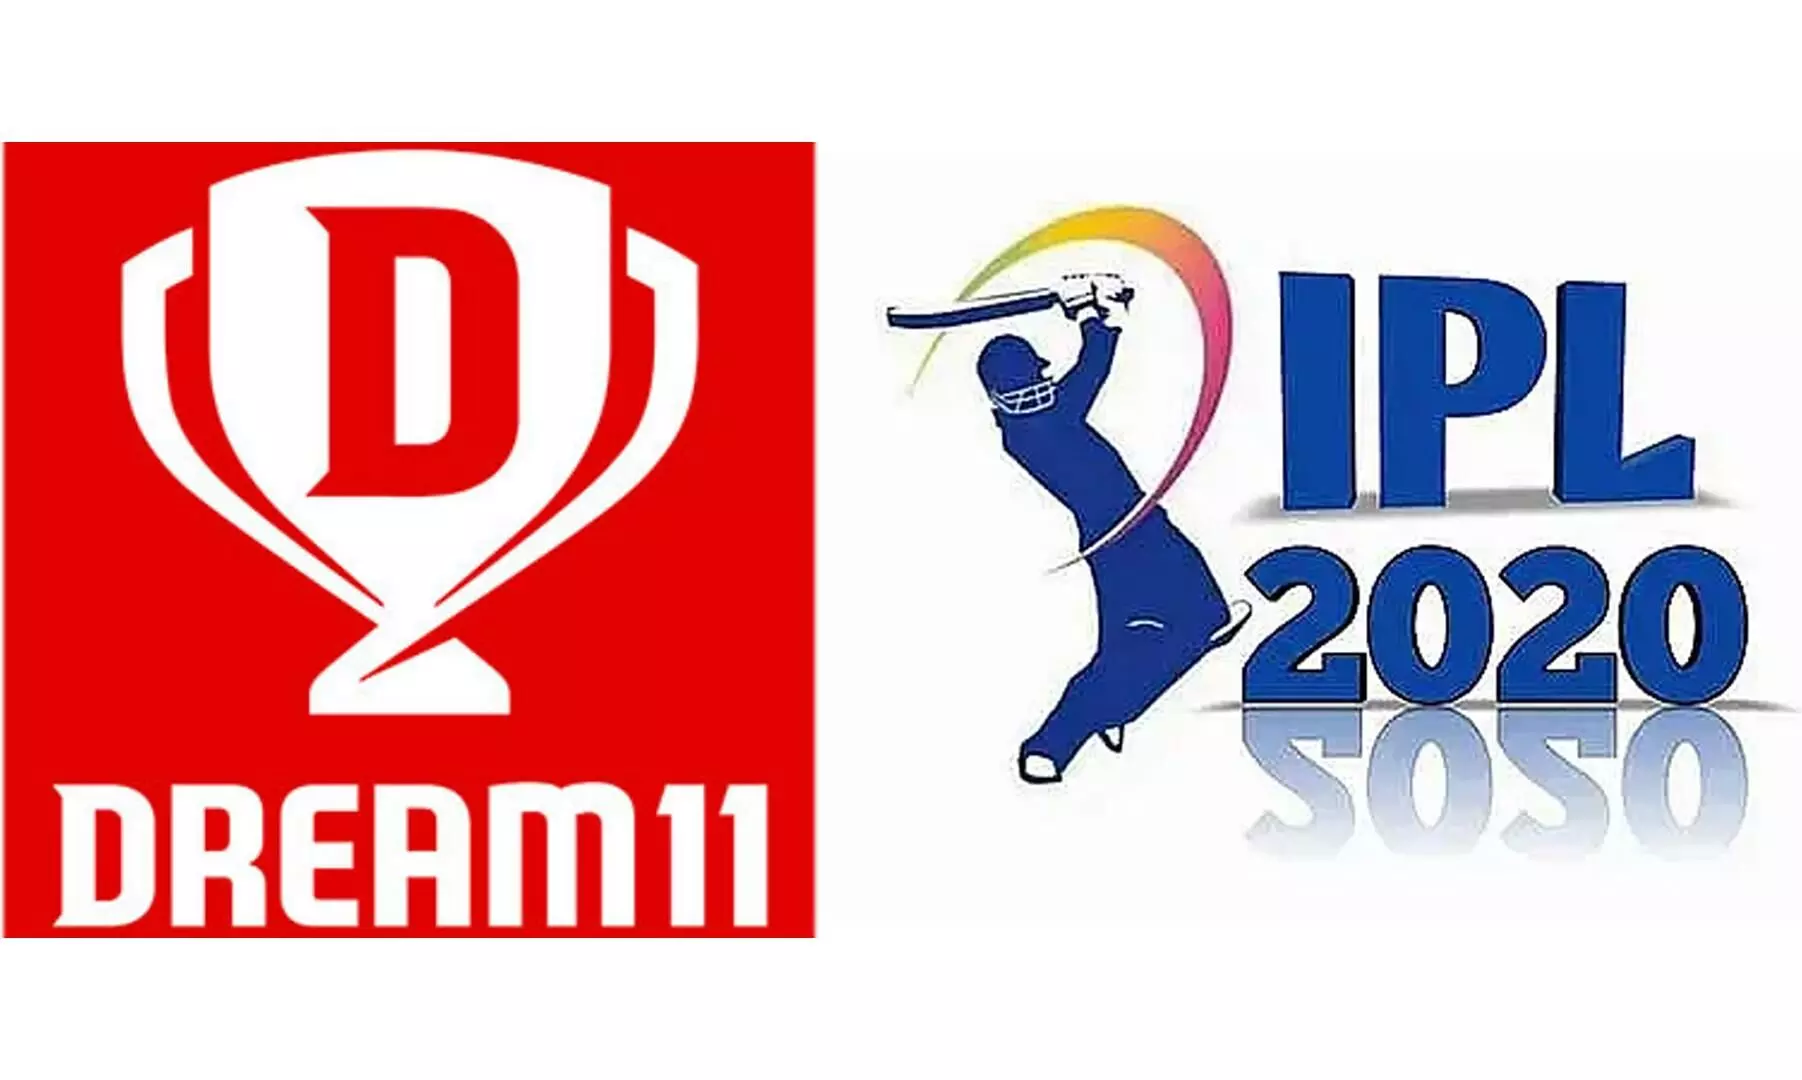 Fantasy league platform Dream11 gets title sponsorship rights for IPL 2020